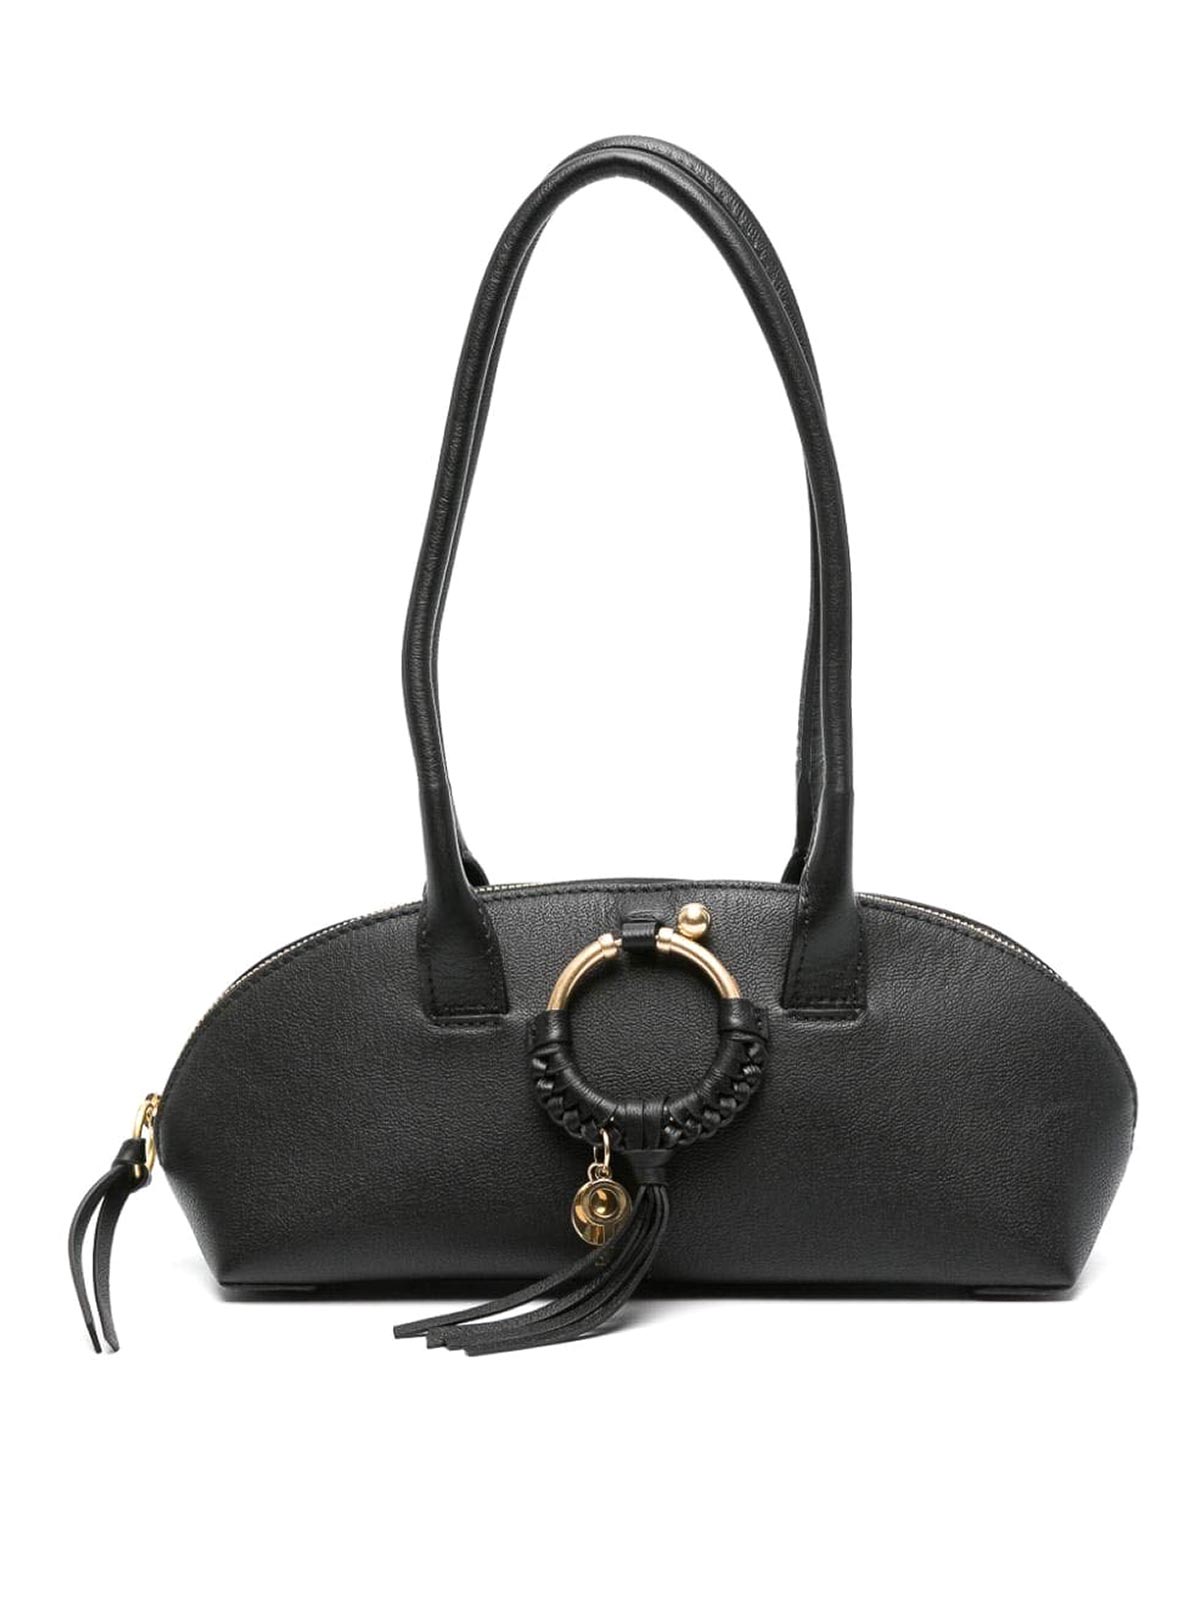 See By Chloé Joan Leather Shoulder Bag In Black